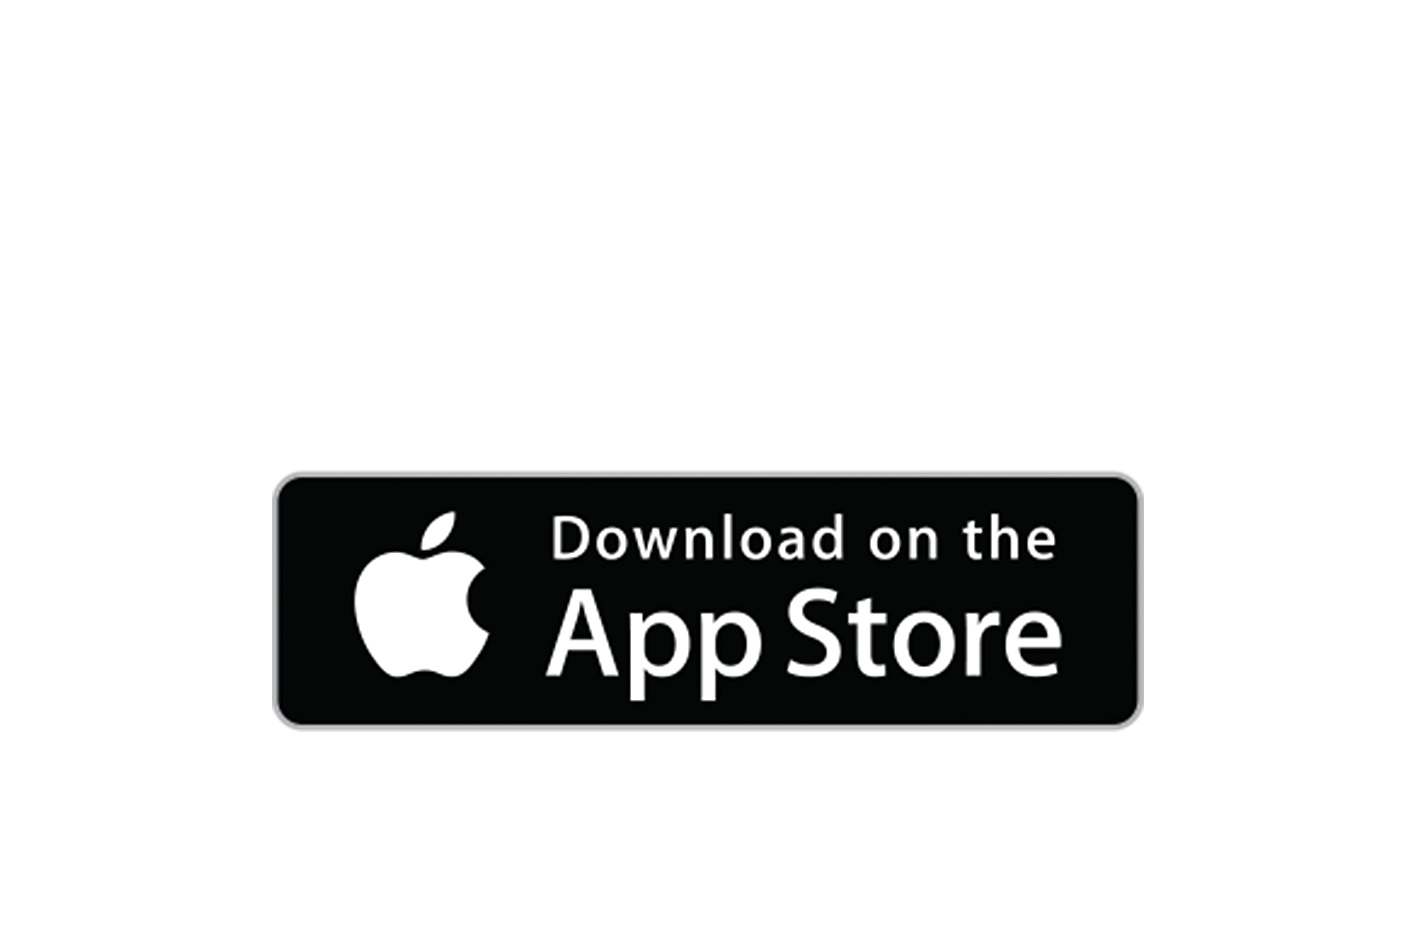 Image of an Apple App Store logo